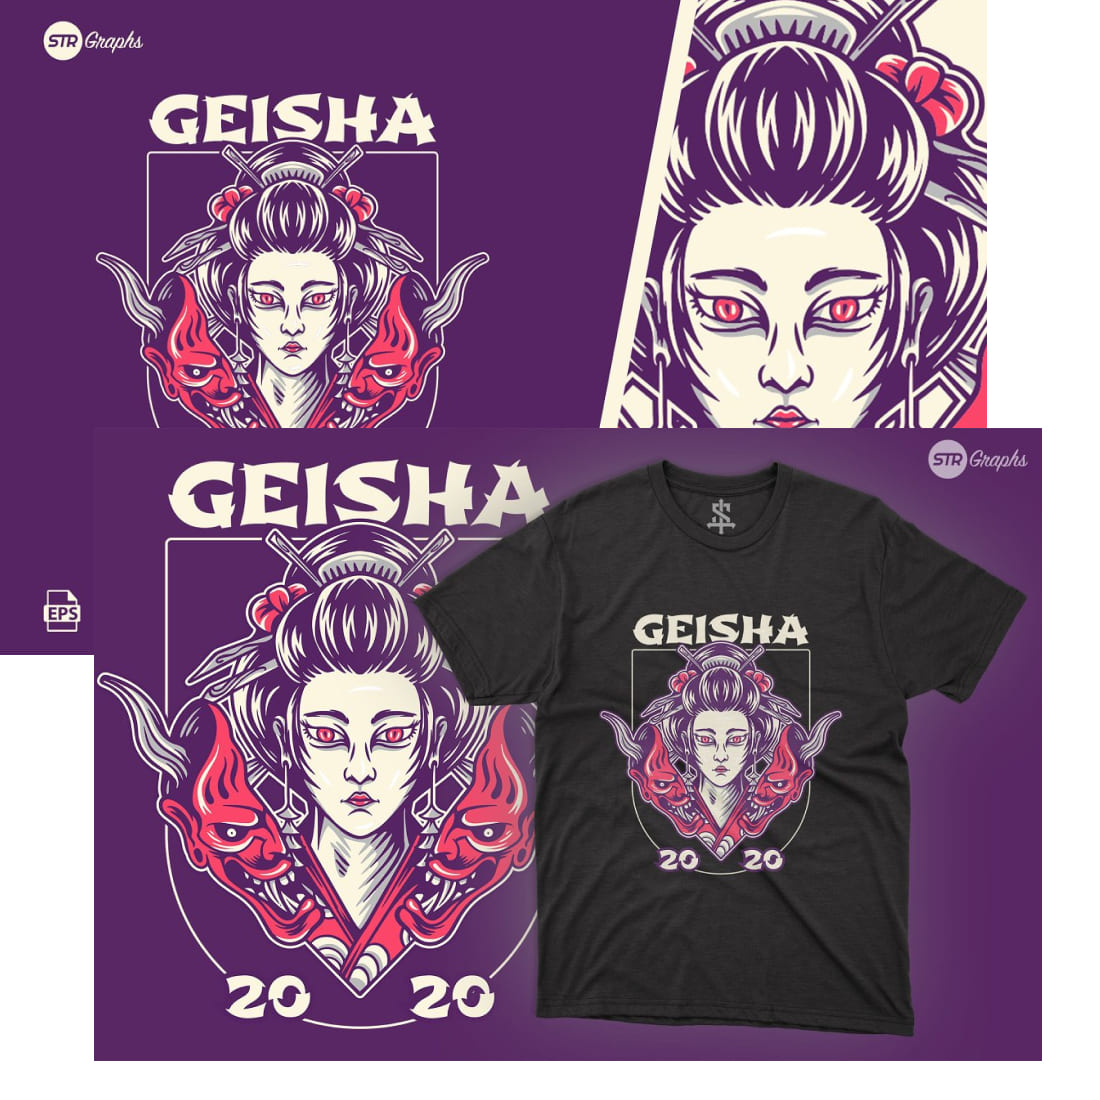 Geisha And Devil Mak - Illustration Cover.